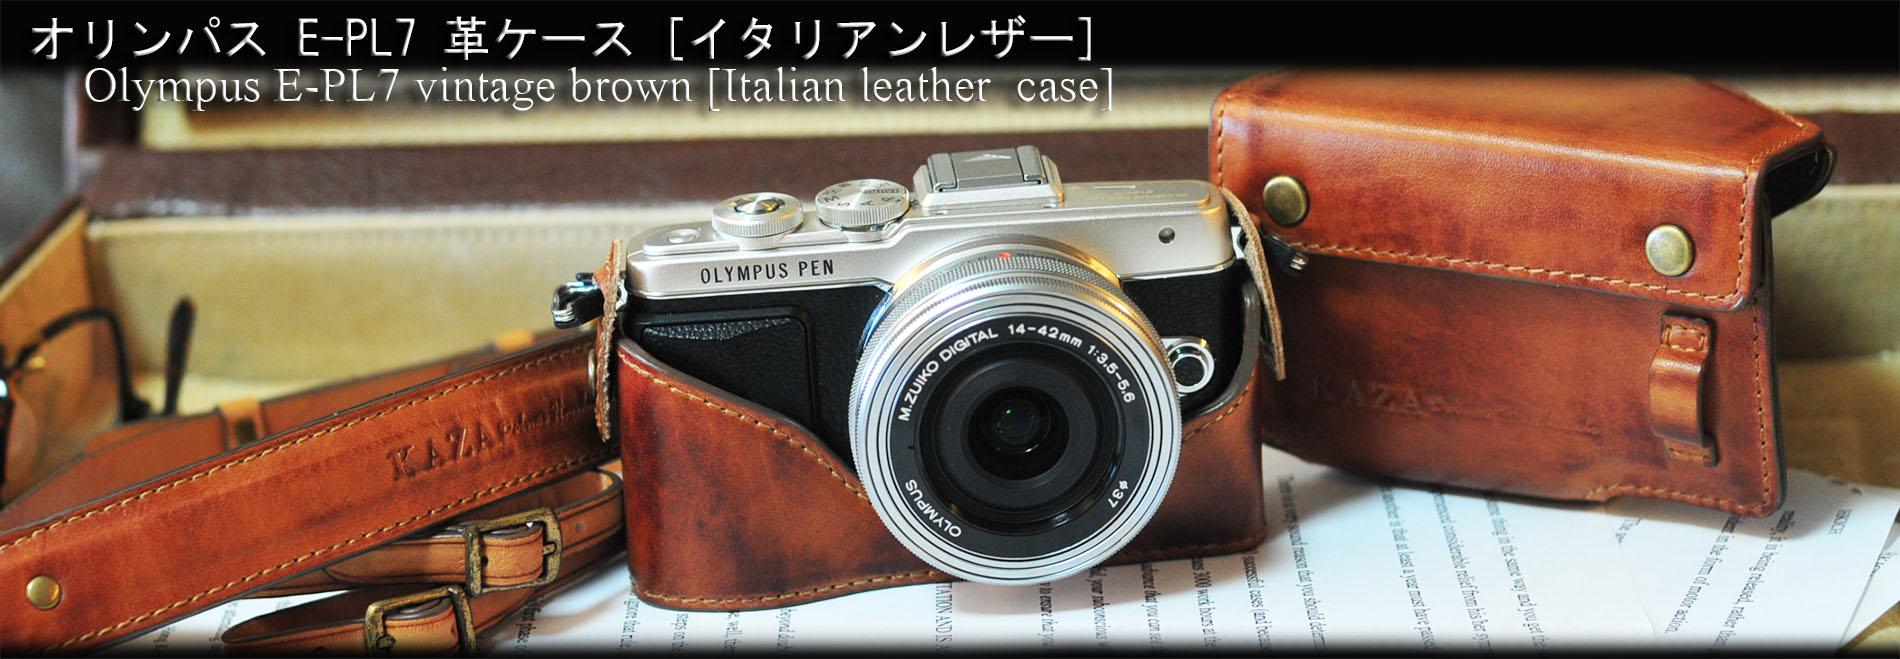 Olympus E-PL7 相機皮套 Leather case オリンパスE-PL7 カメラケース by KAZA